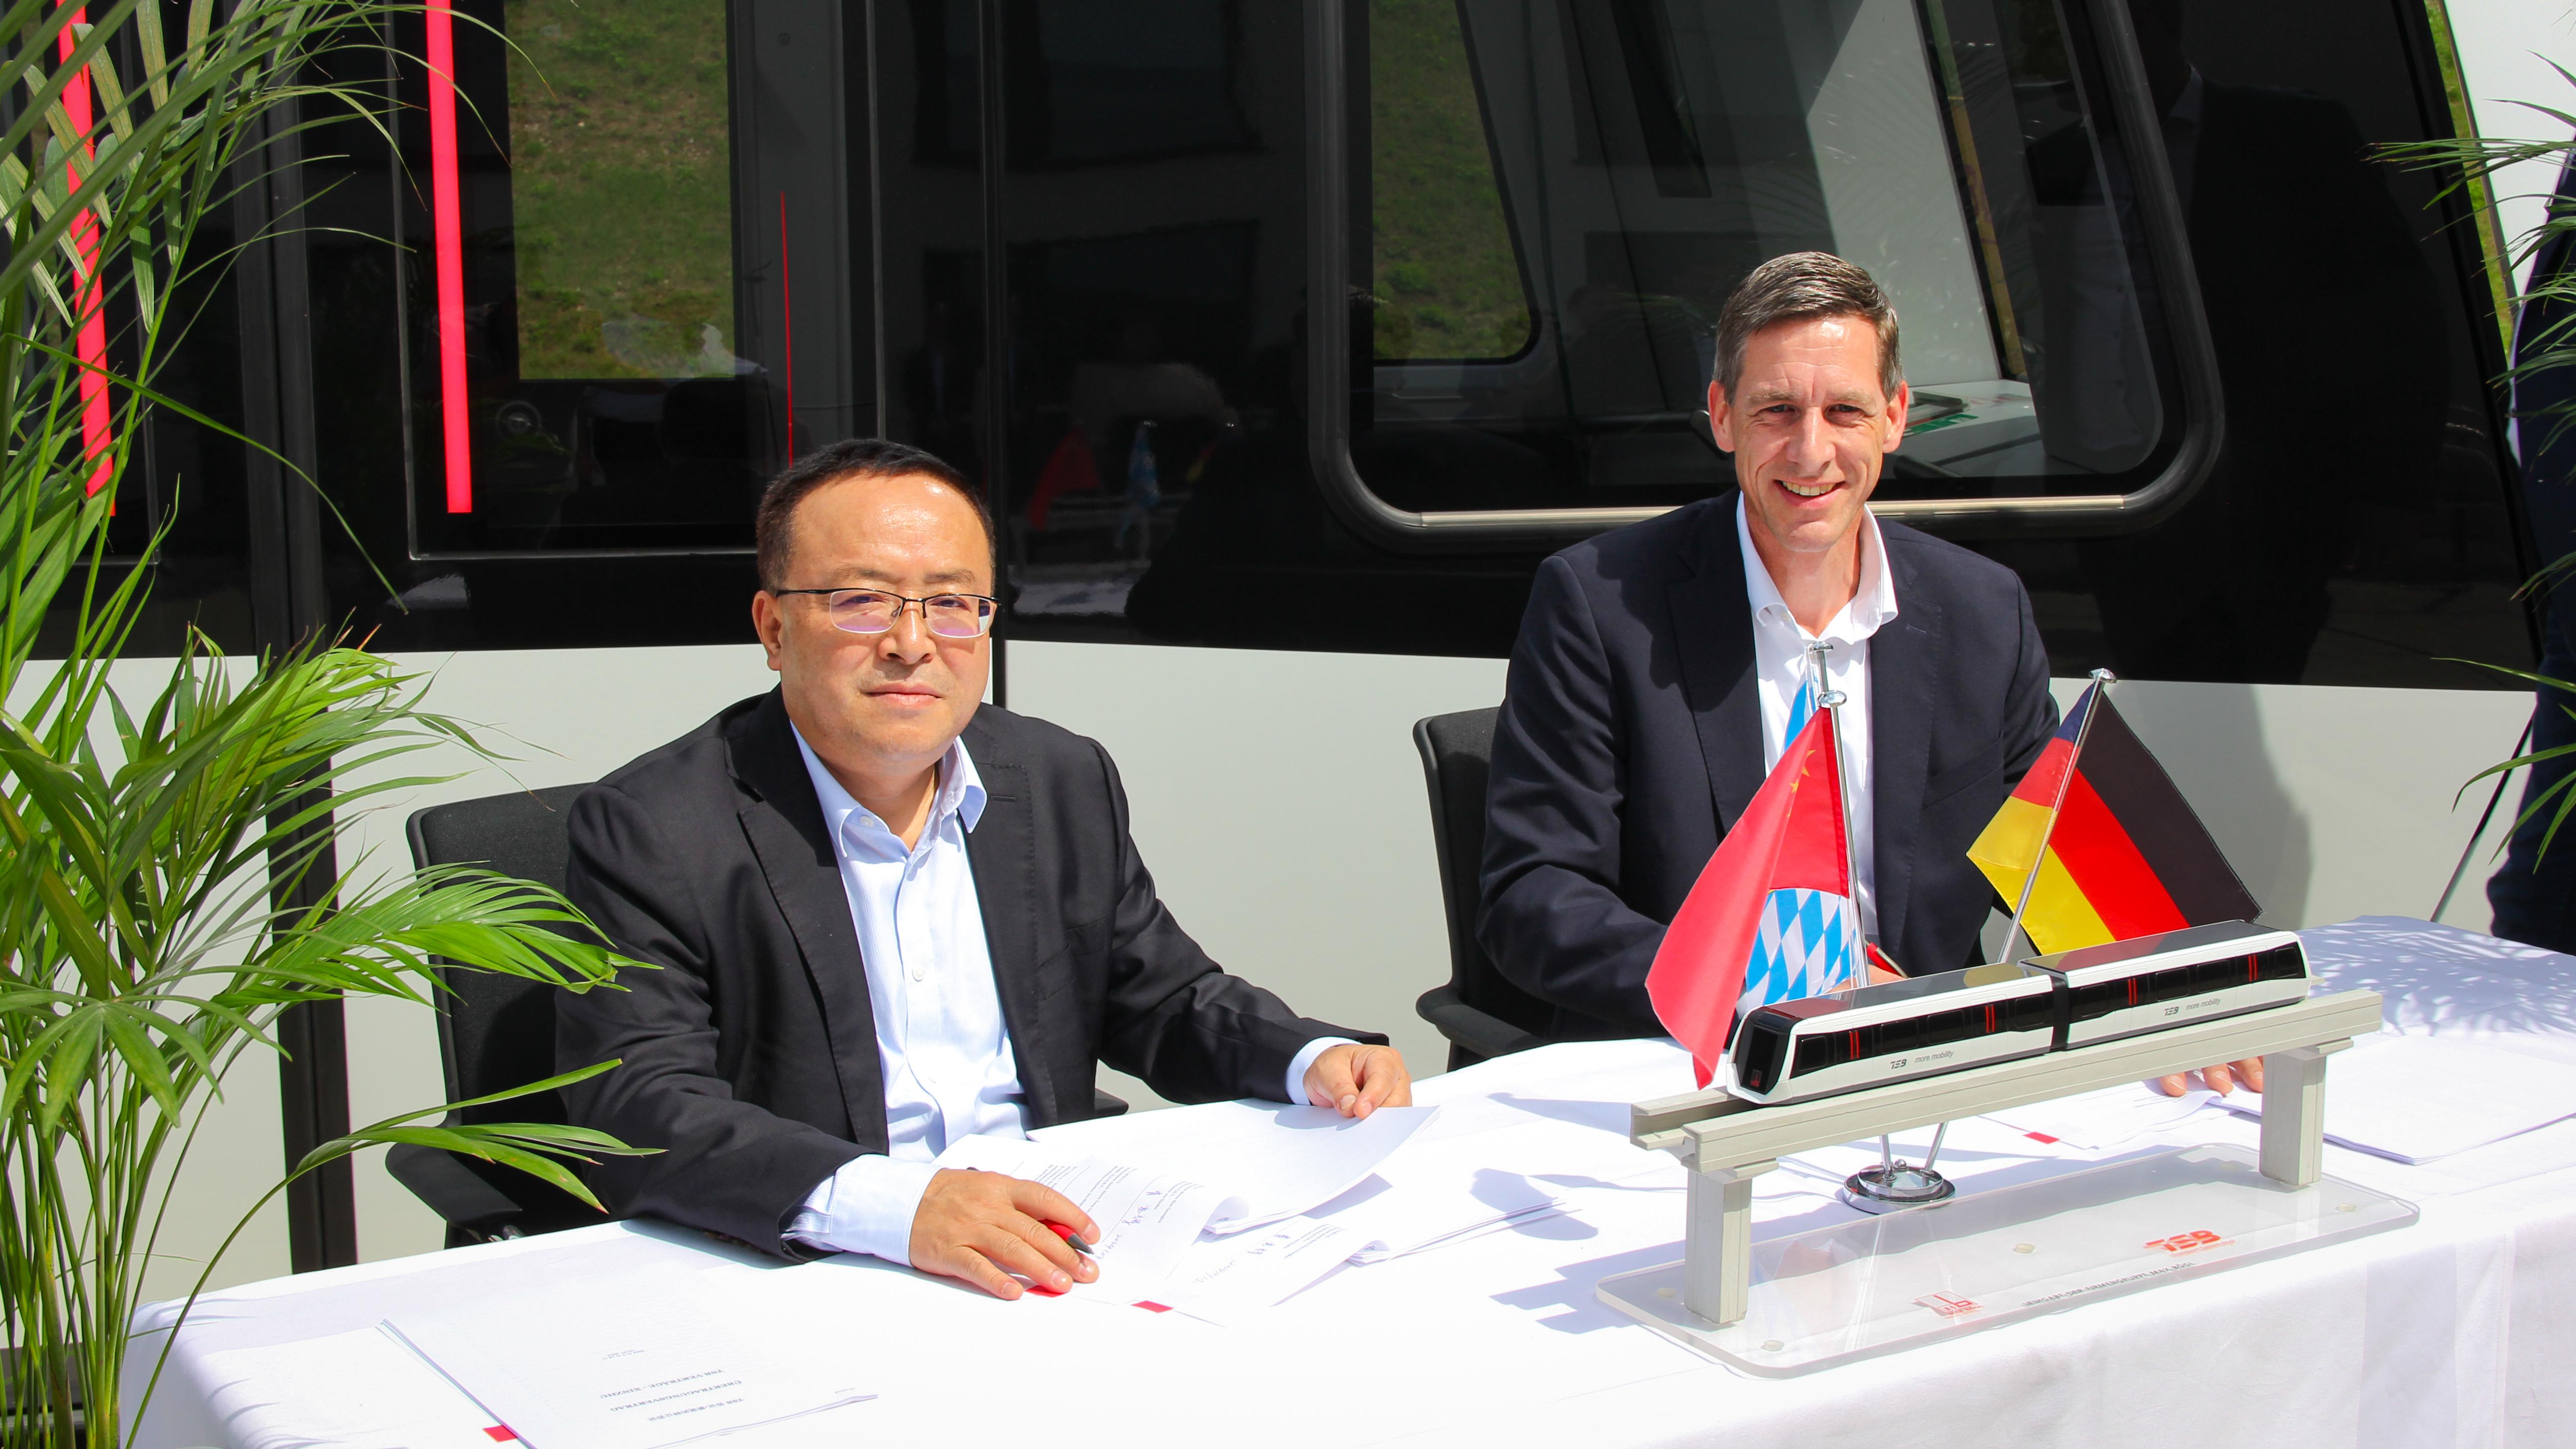 Neuer Kooperationsvertrag für das Transport System Bögl in China geschlossen